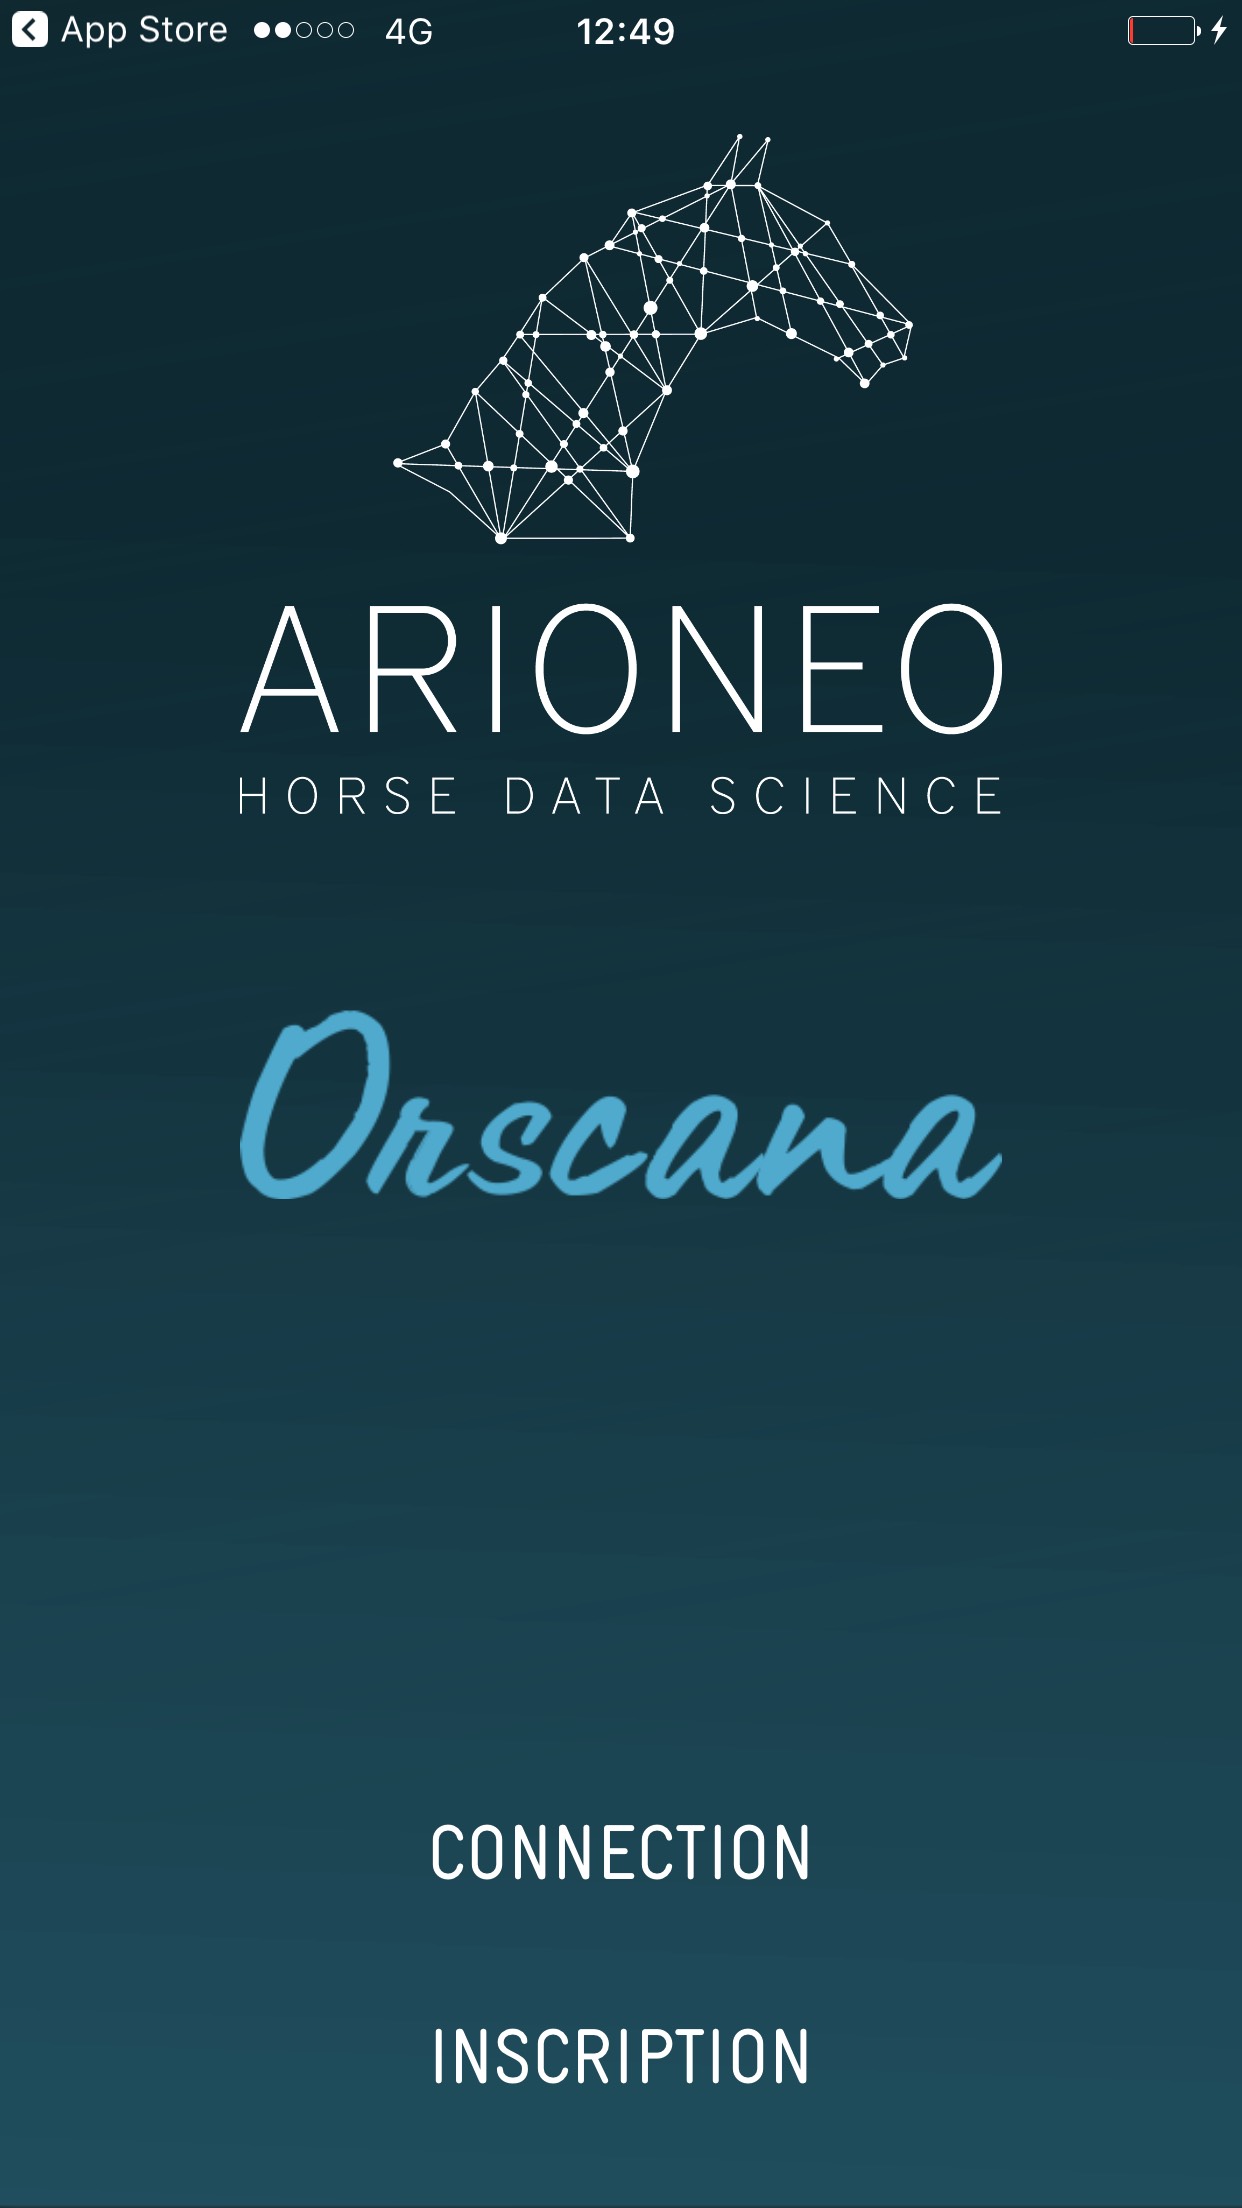 Orscana Arioneo